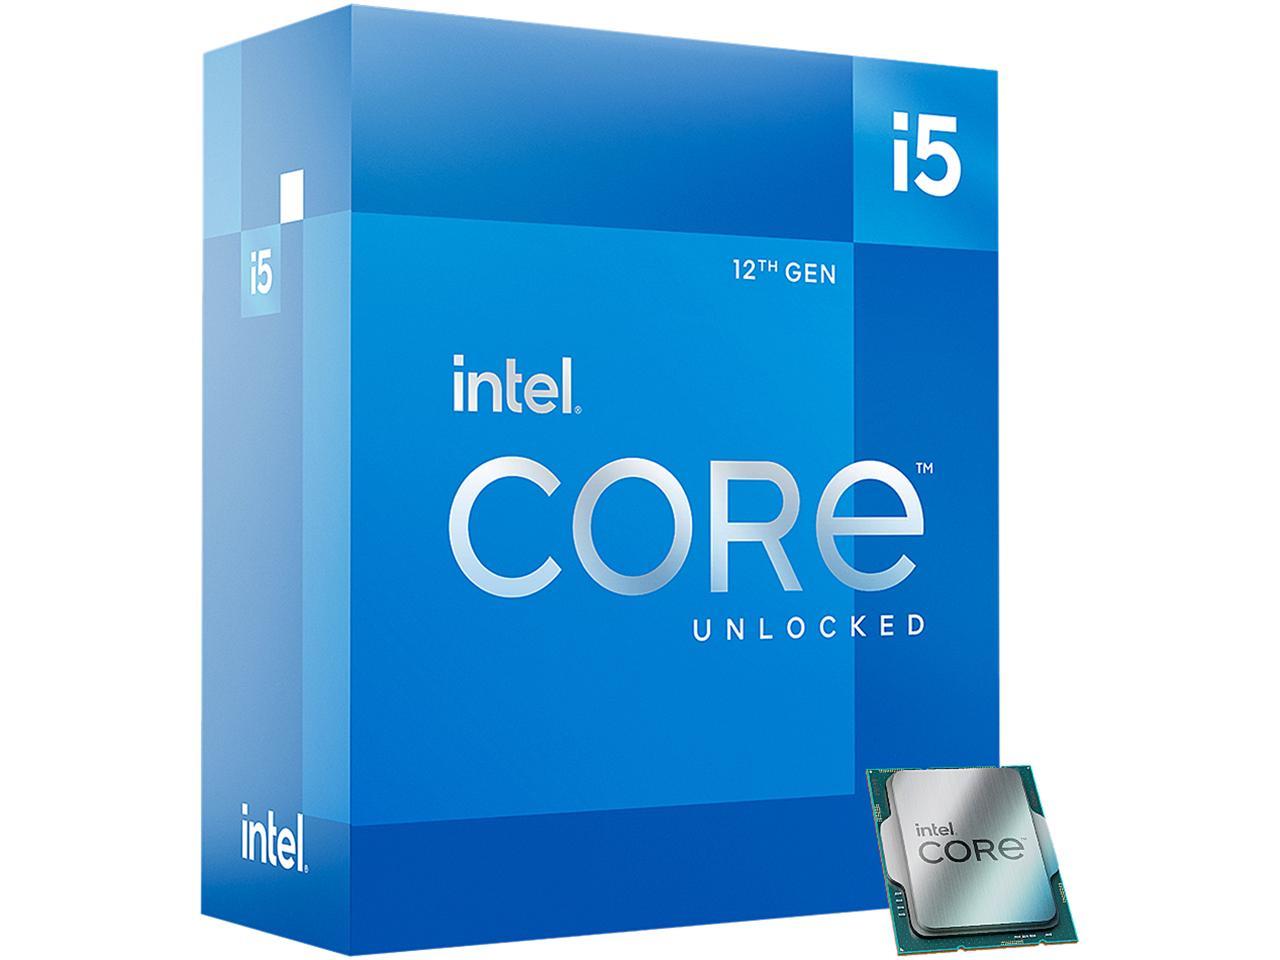 Intel Core i5-12600K - Core i5 12th Gen Alder Lake 10-Core (6P+4E) 3.7 GHz Processor + Total War Warhammer III $190 + Free Shipping